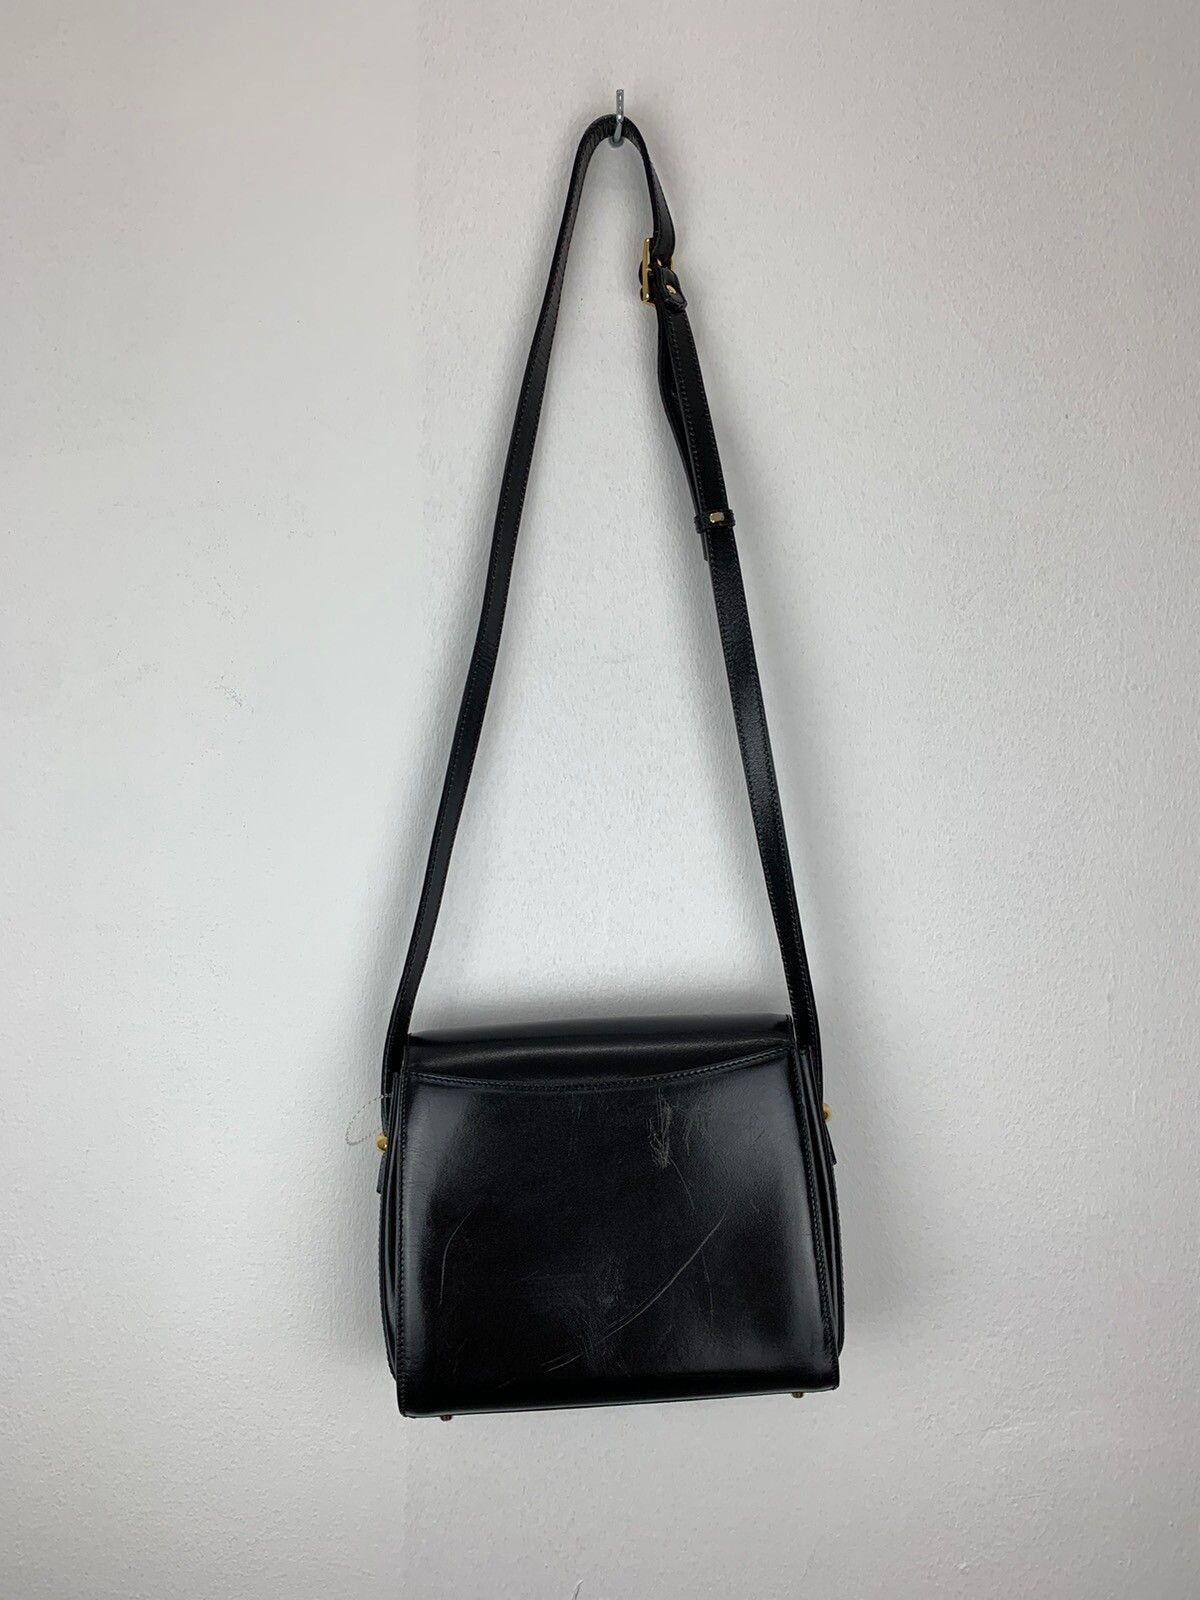 BALLY VINTAGE black leather hard shell bag antique bag Italy - 3